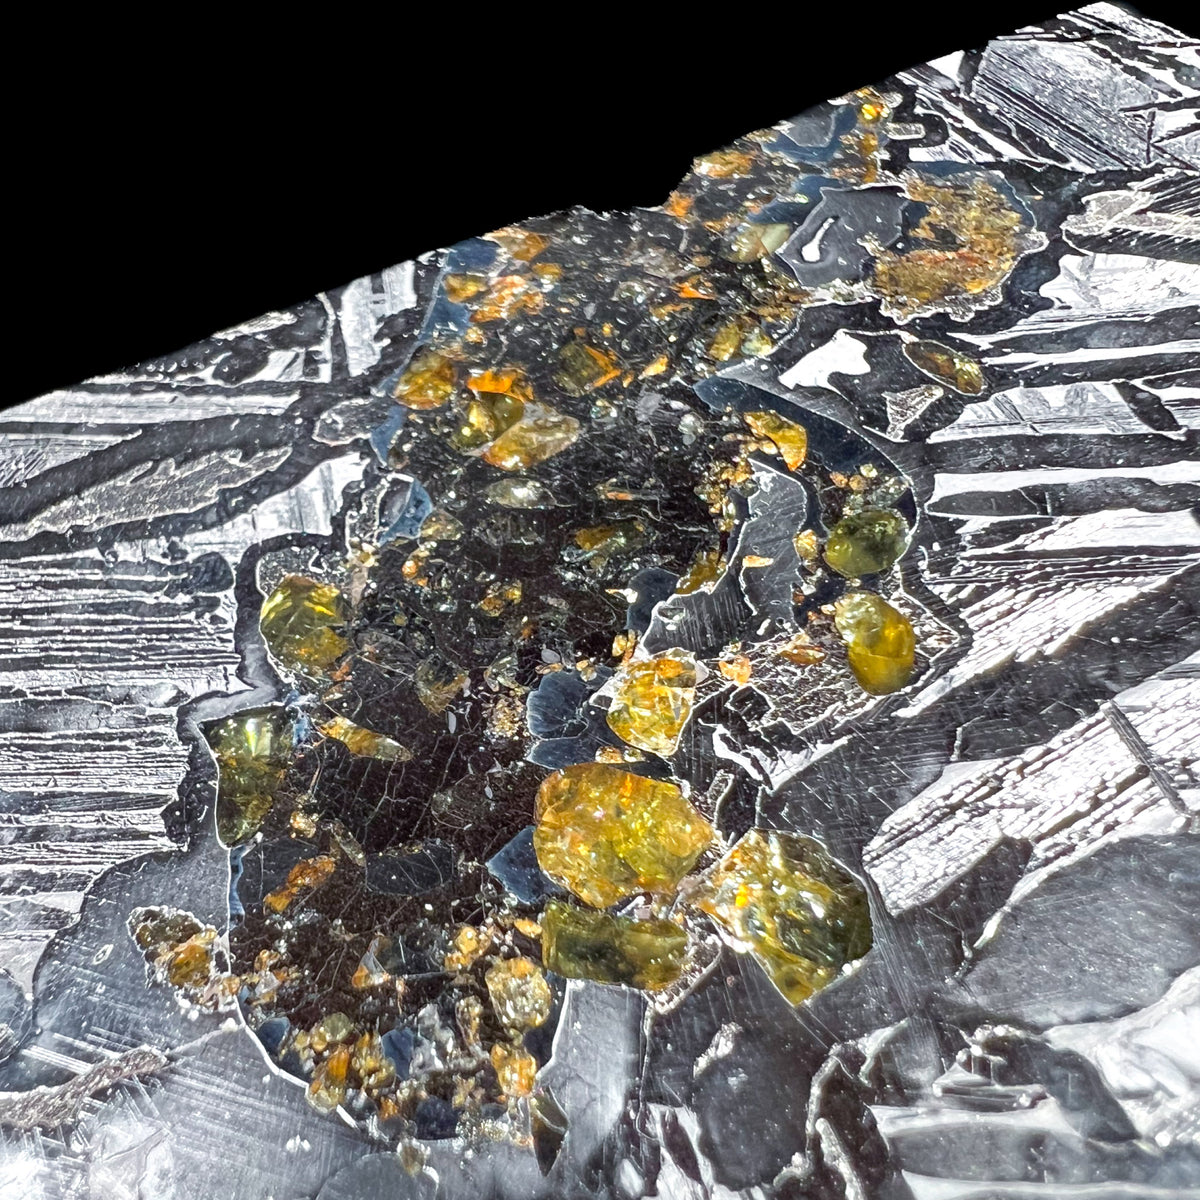 Gem Quality Olivine Crystals in Pallasite Meteorite Slice